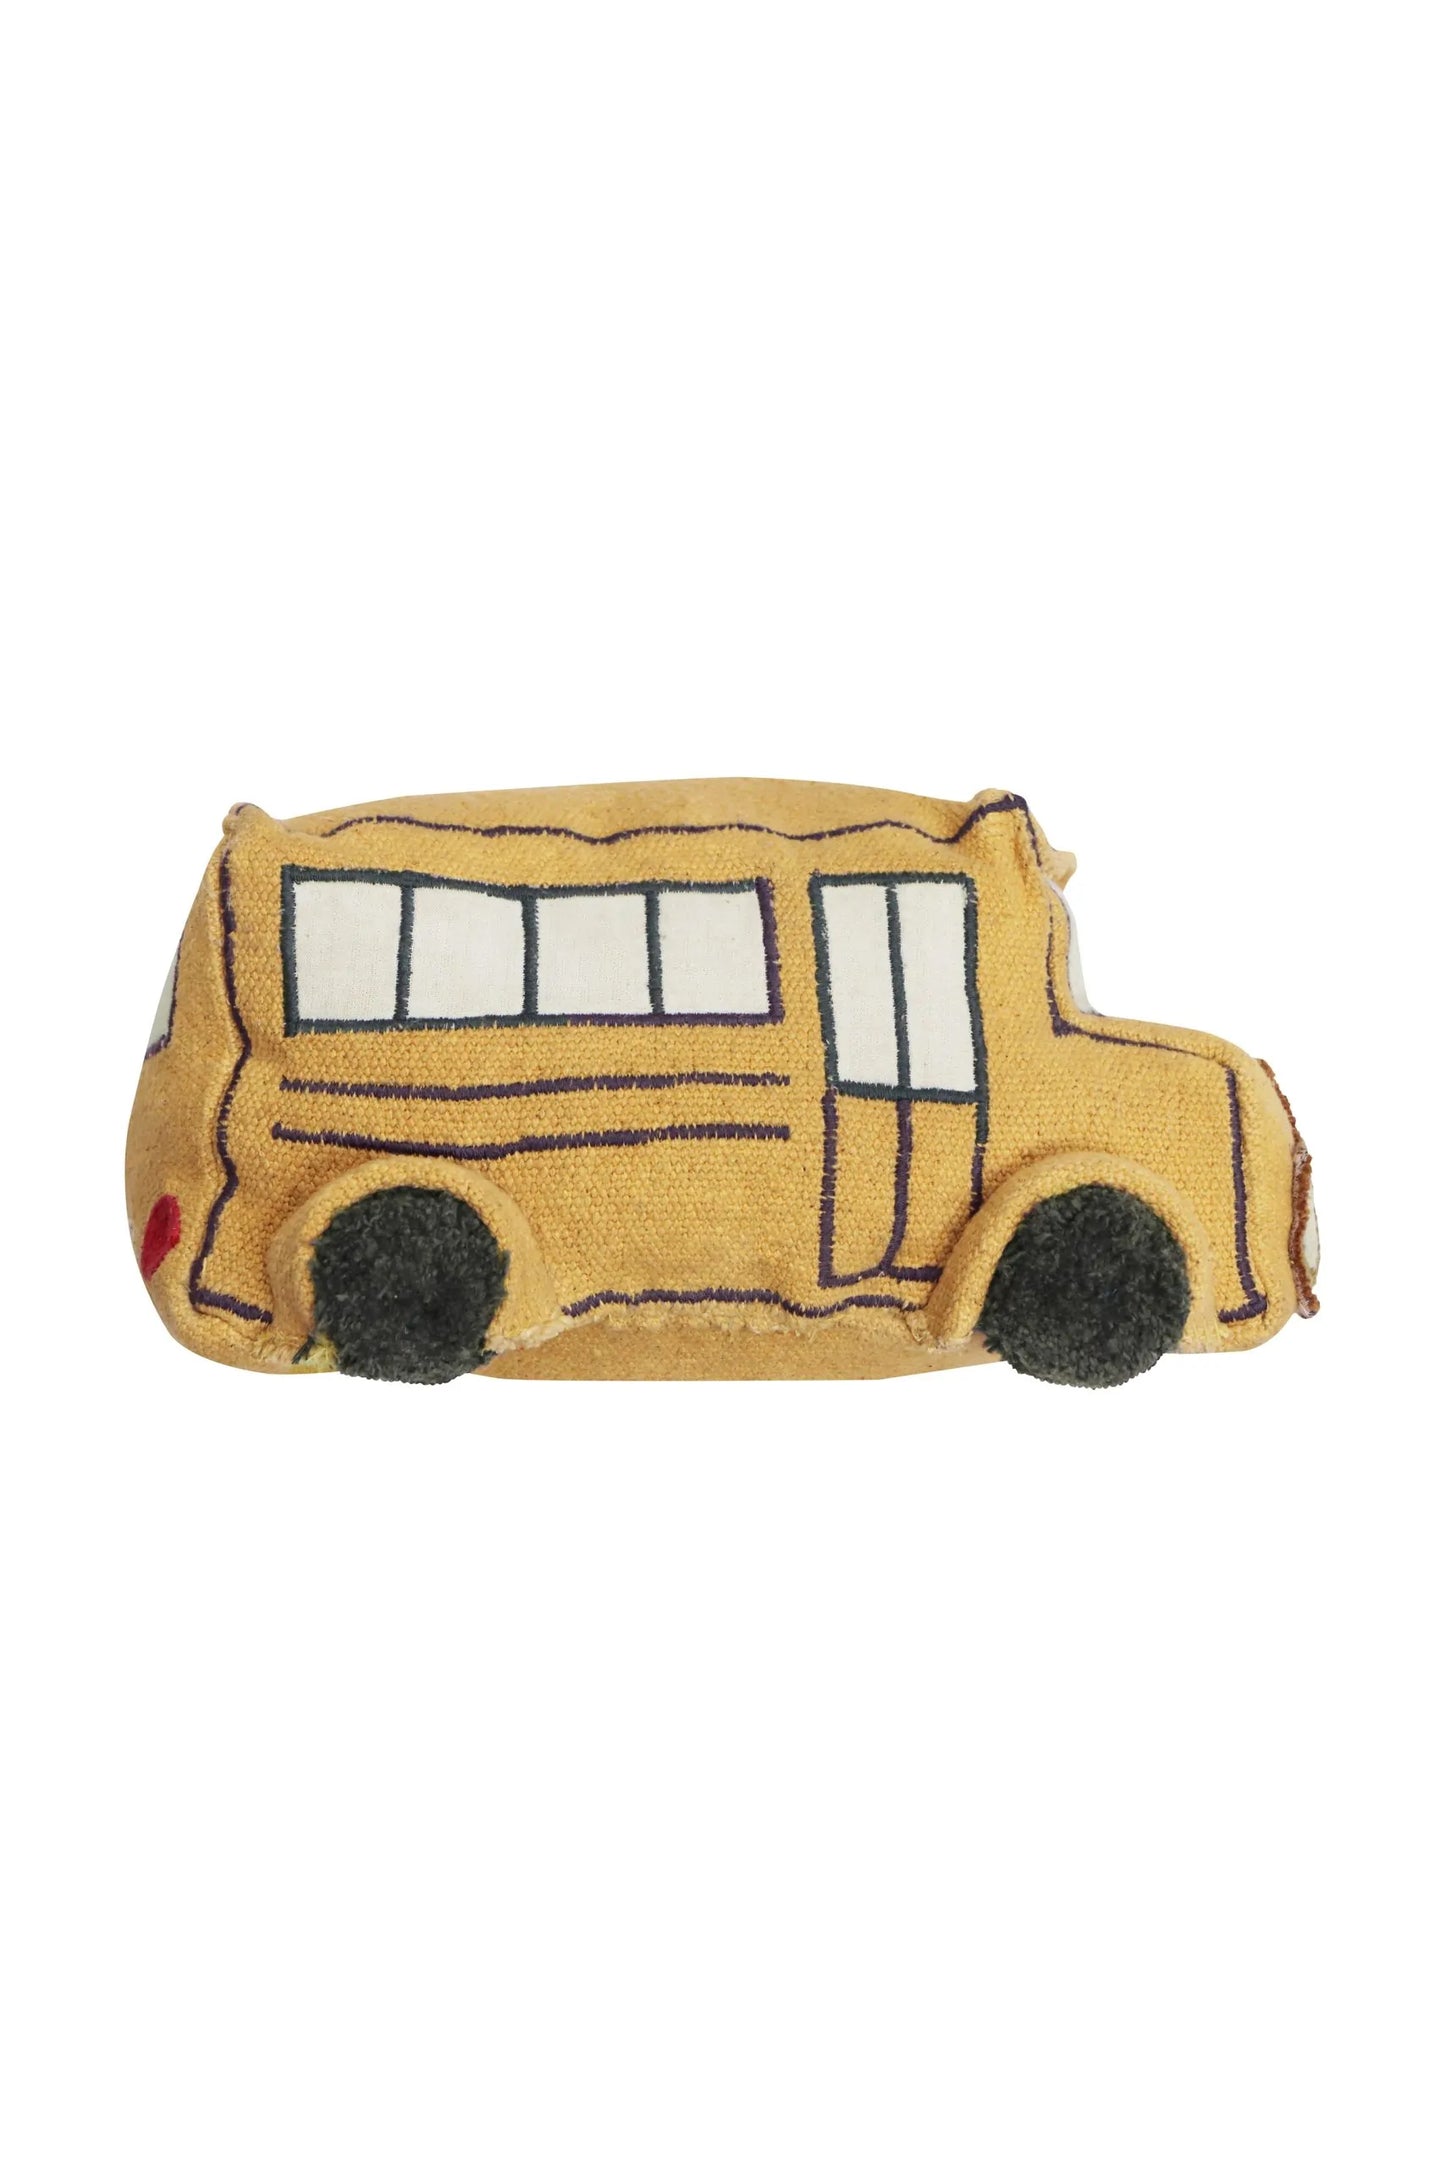 Ride & Roll play set - School bus